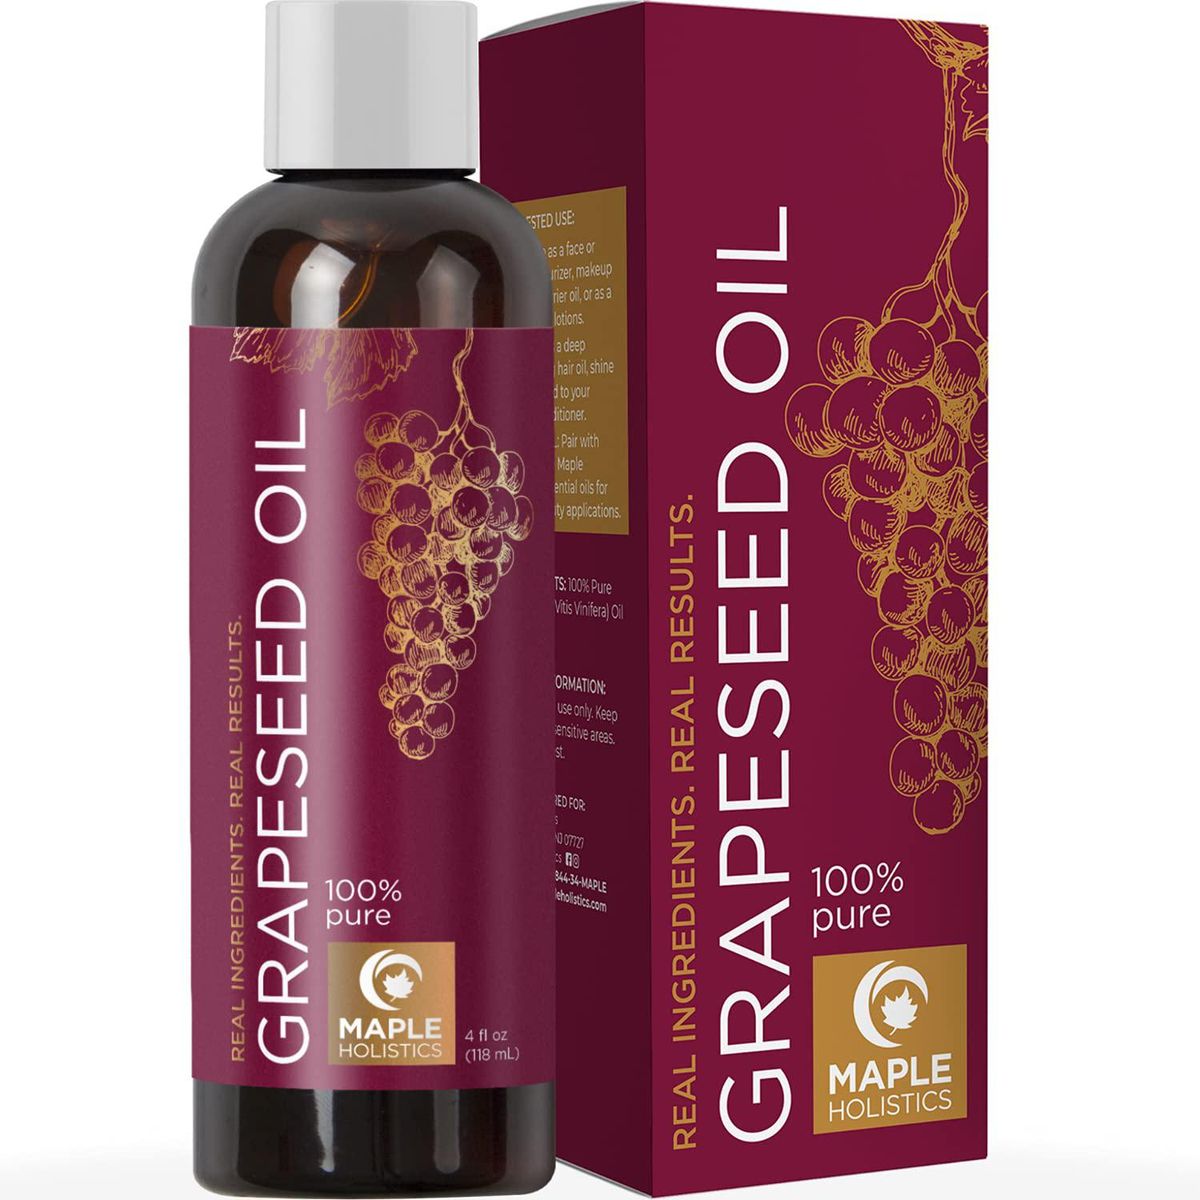 maple holistics pure grapeseed oil for skin care